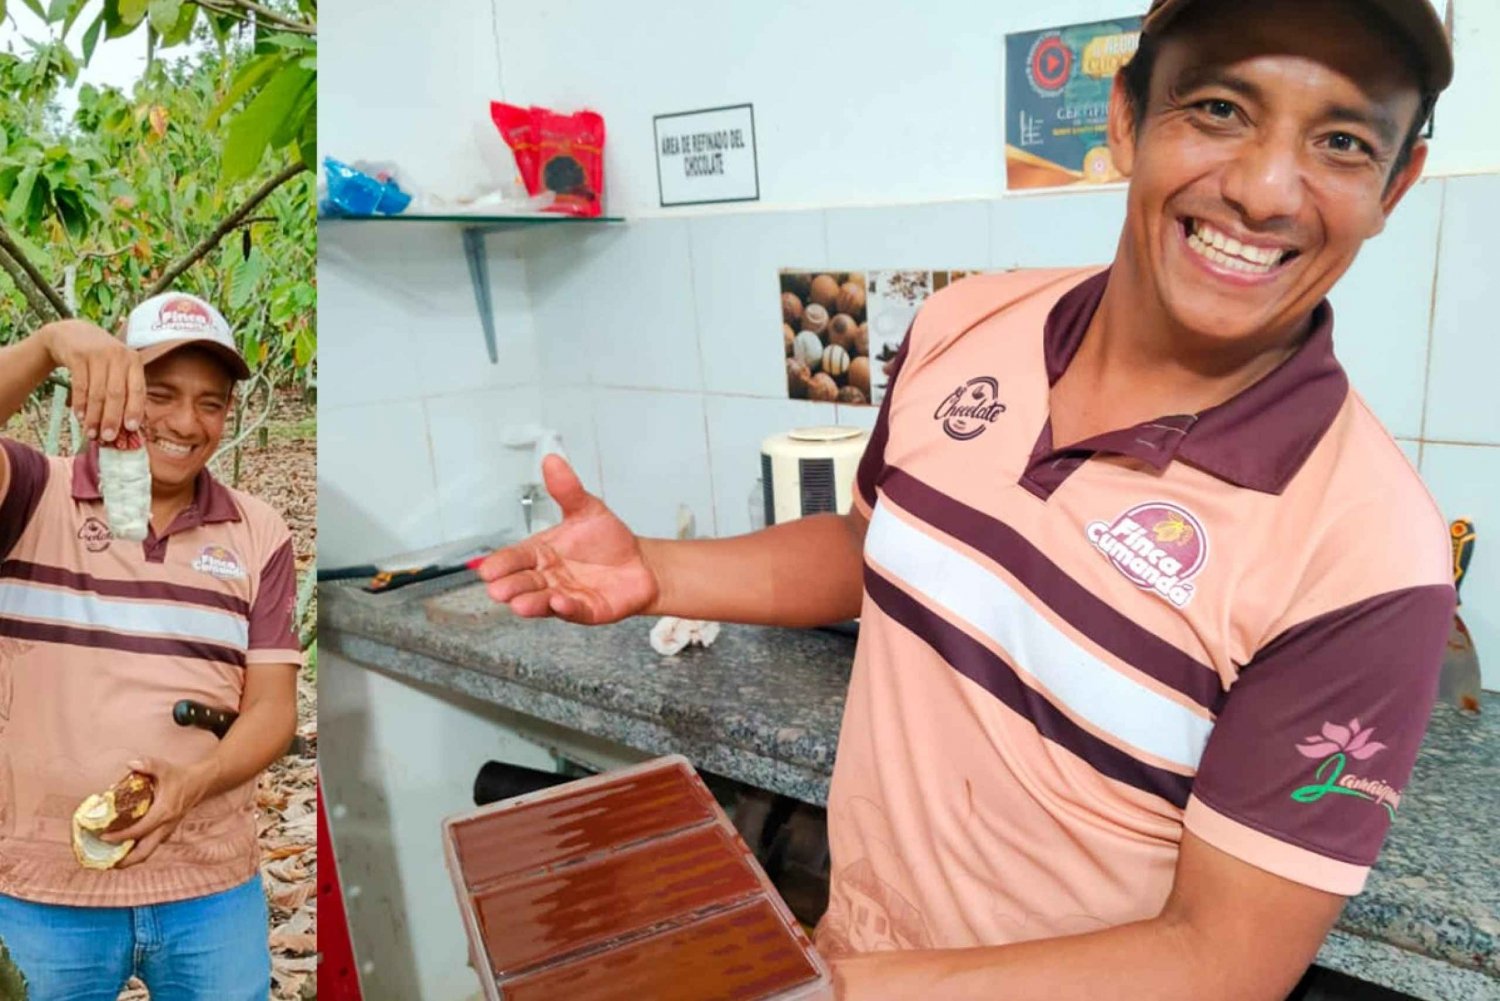 Guayaquil: Cacao and chokolate making farm tour